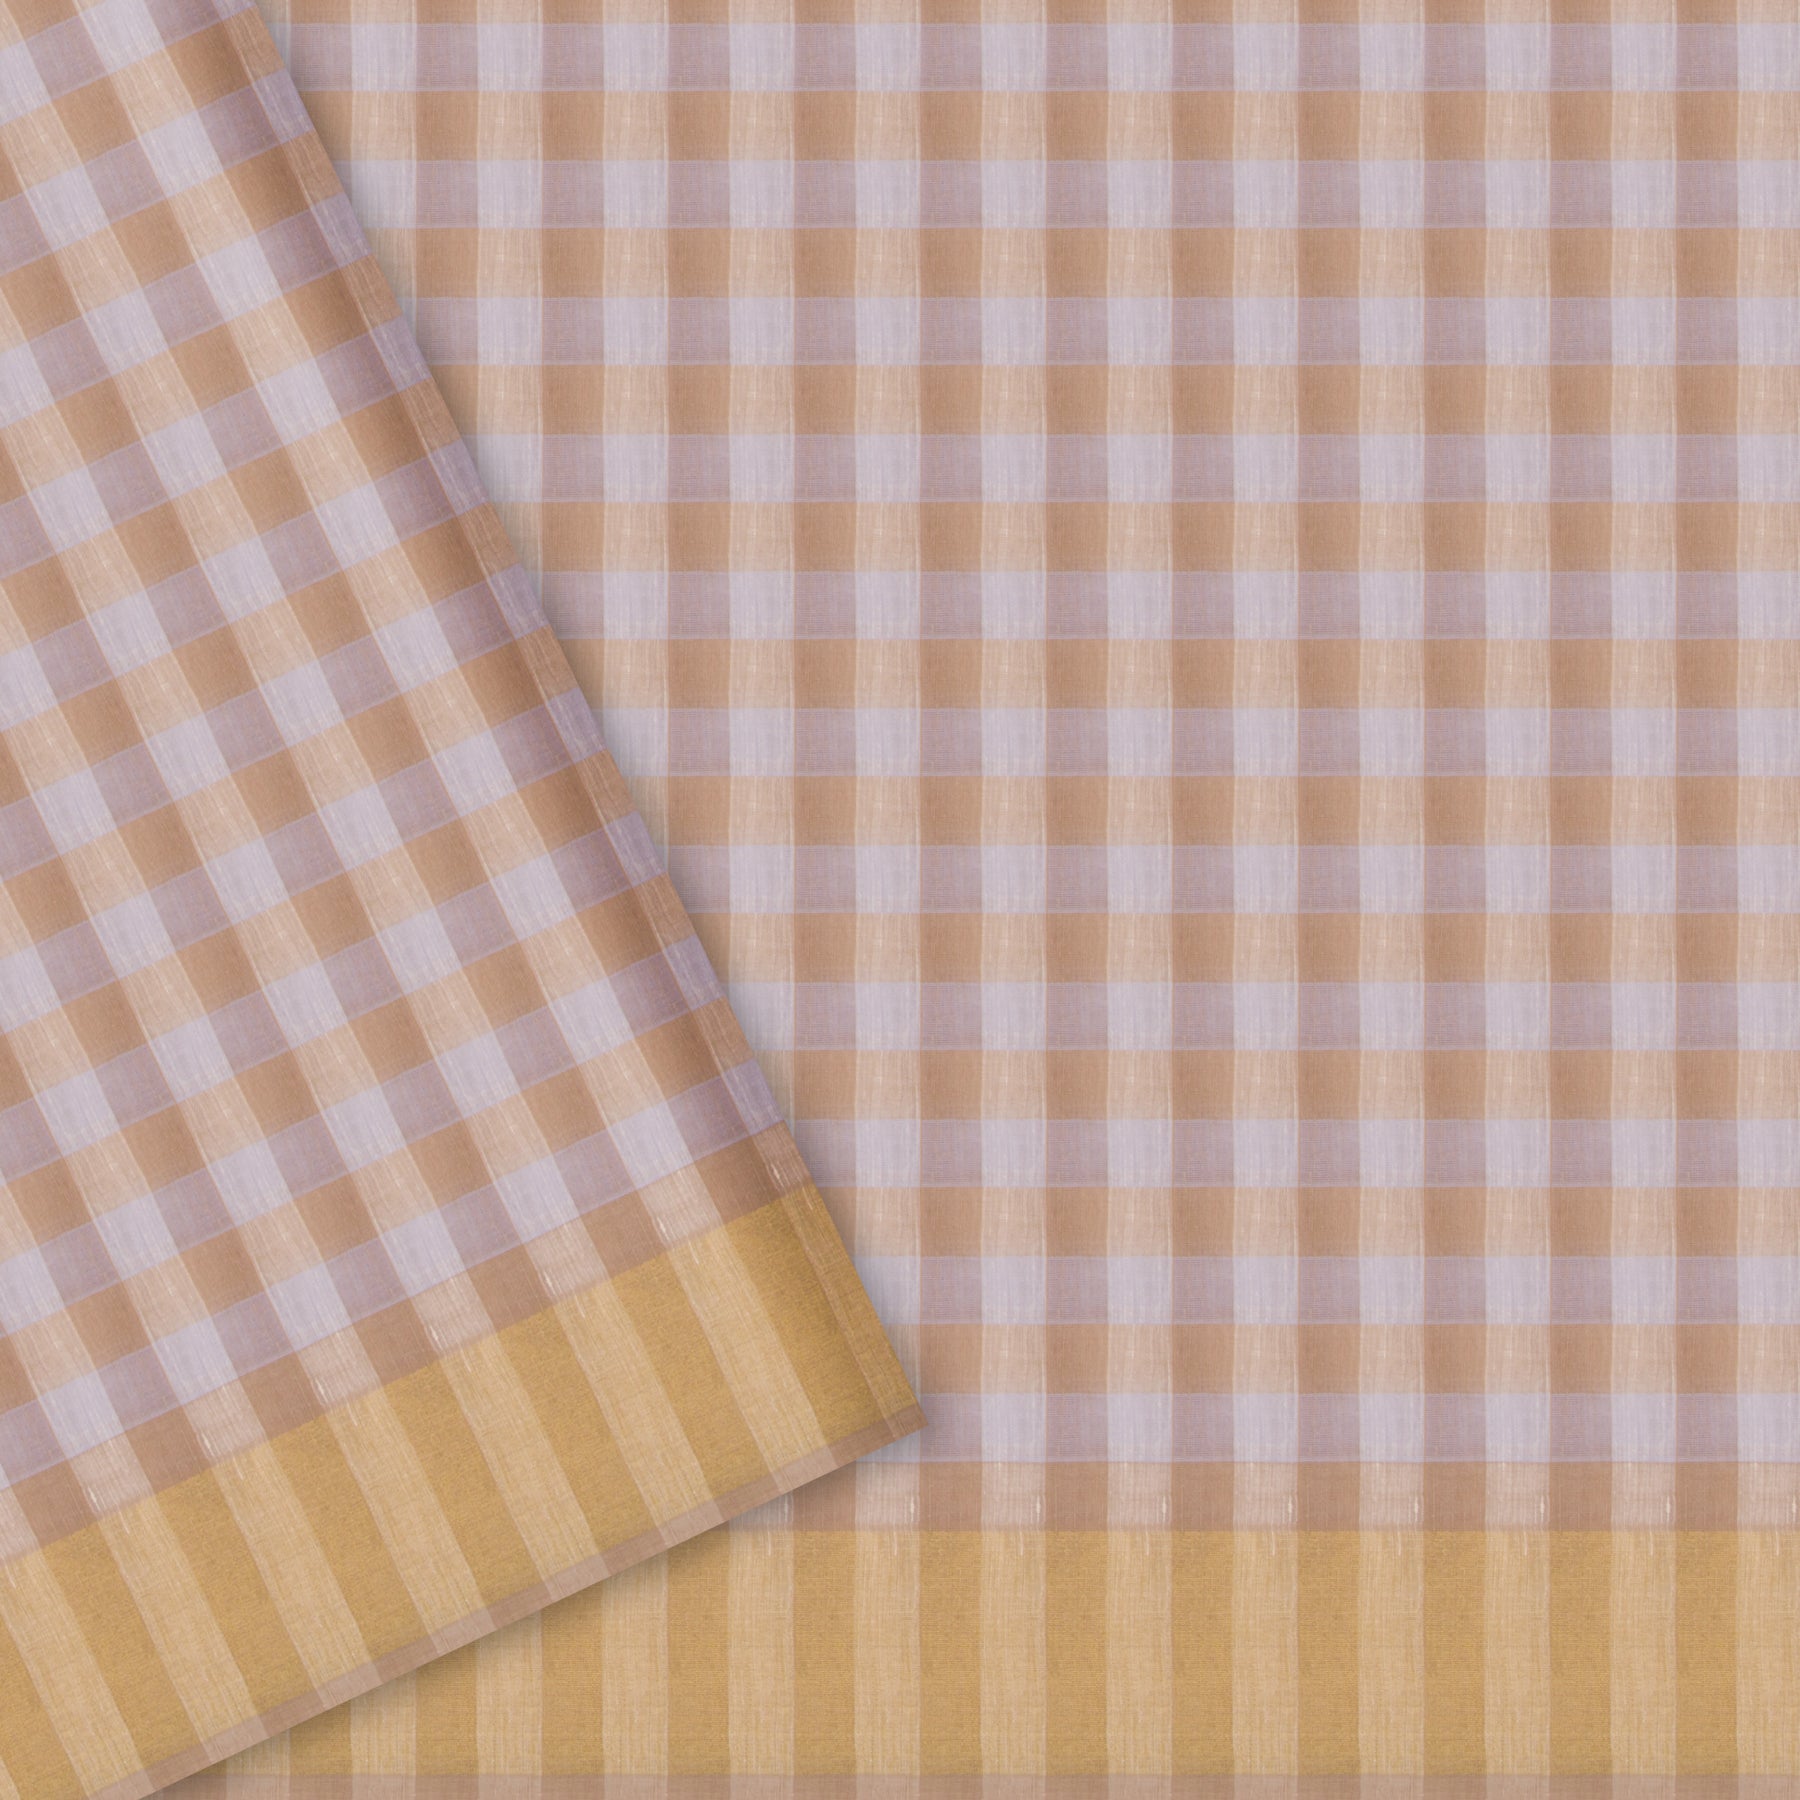 Pradeep Pillai Linen/Cotton Sari 008-01-2558 - Blouse View